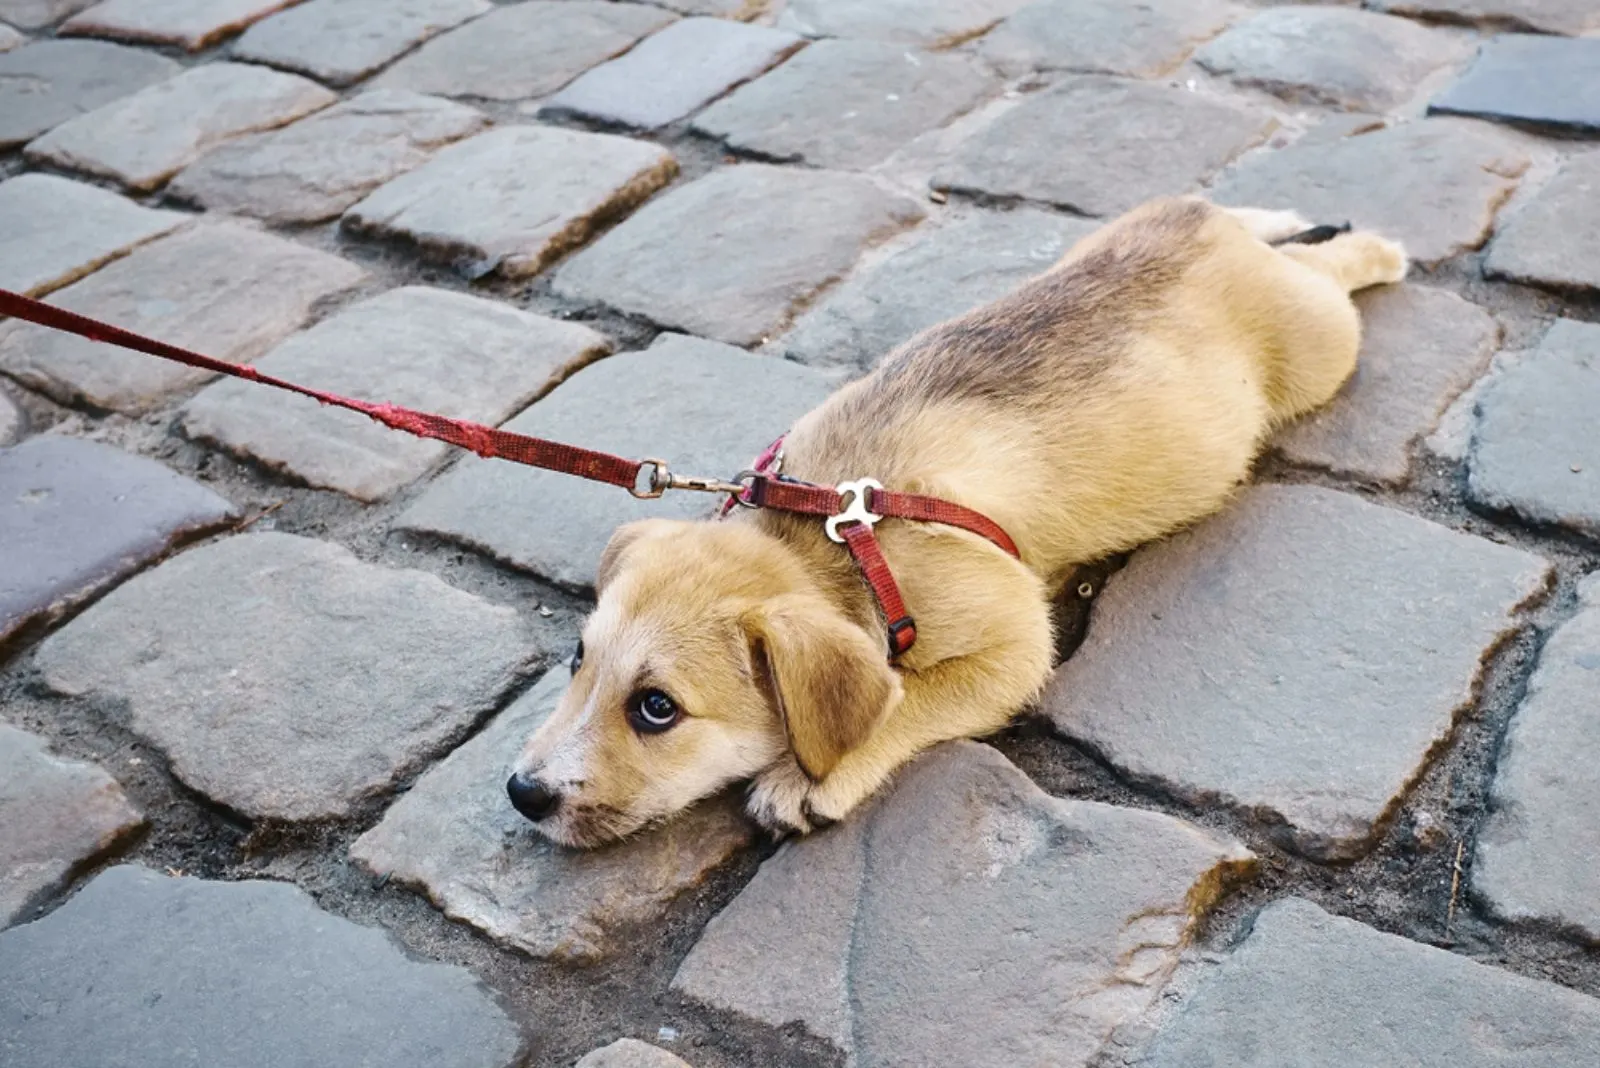  small sad dog on a leash  lies on the paving stones